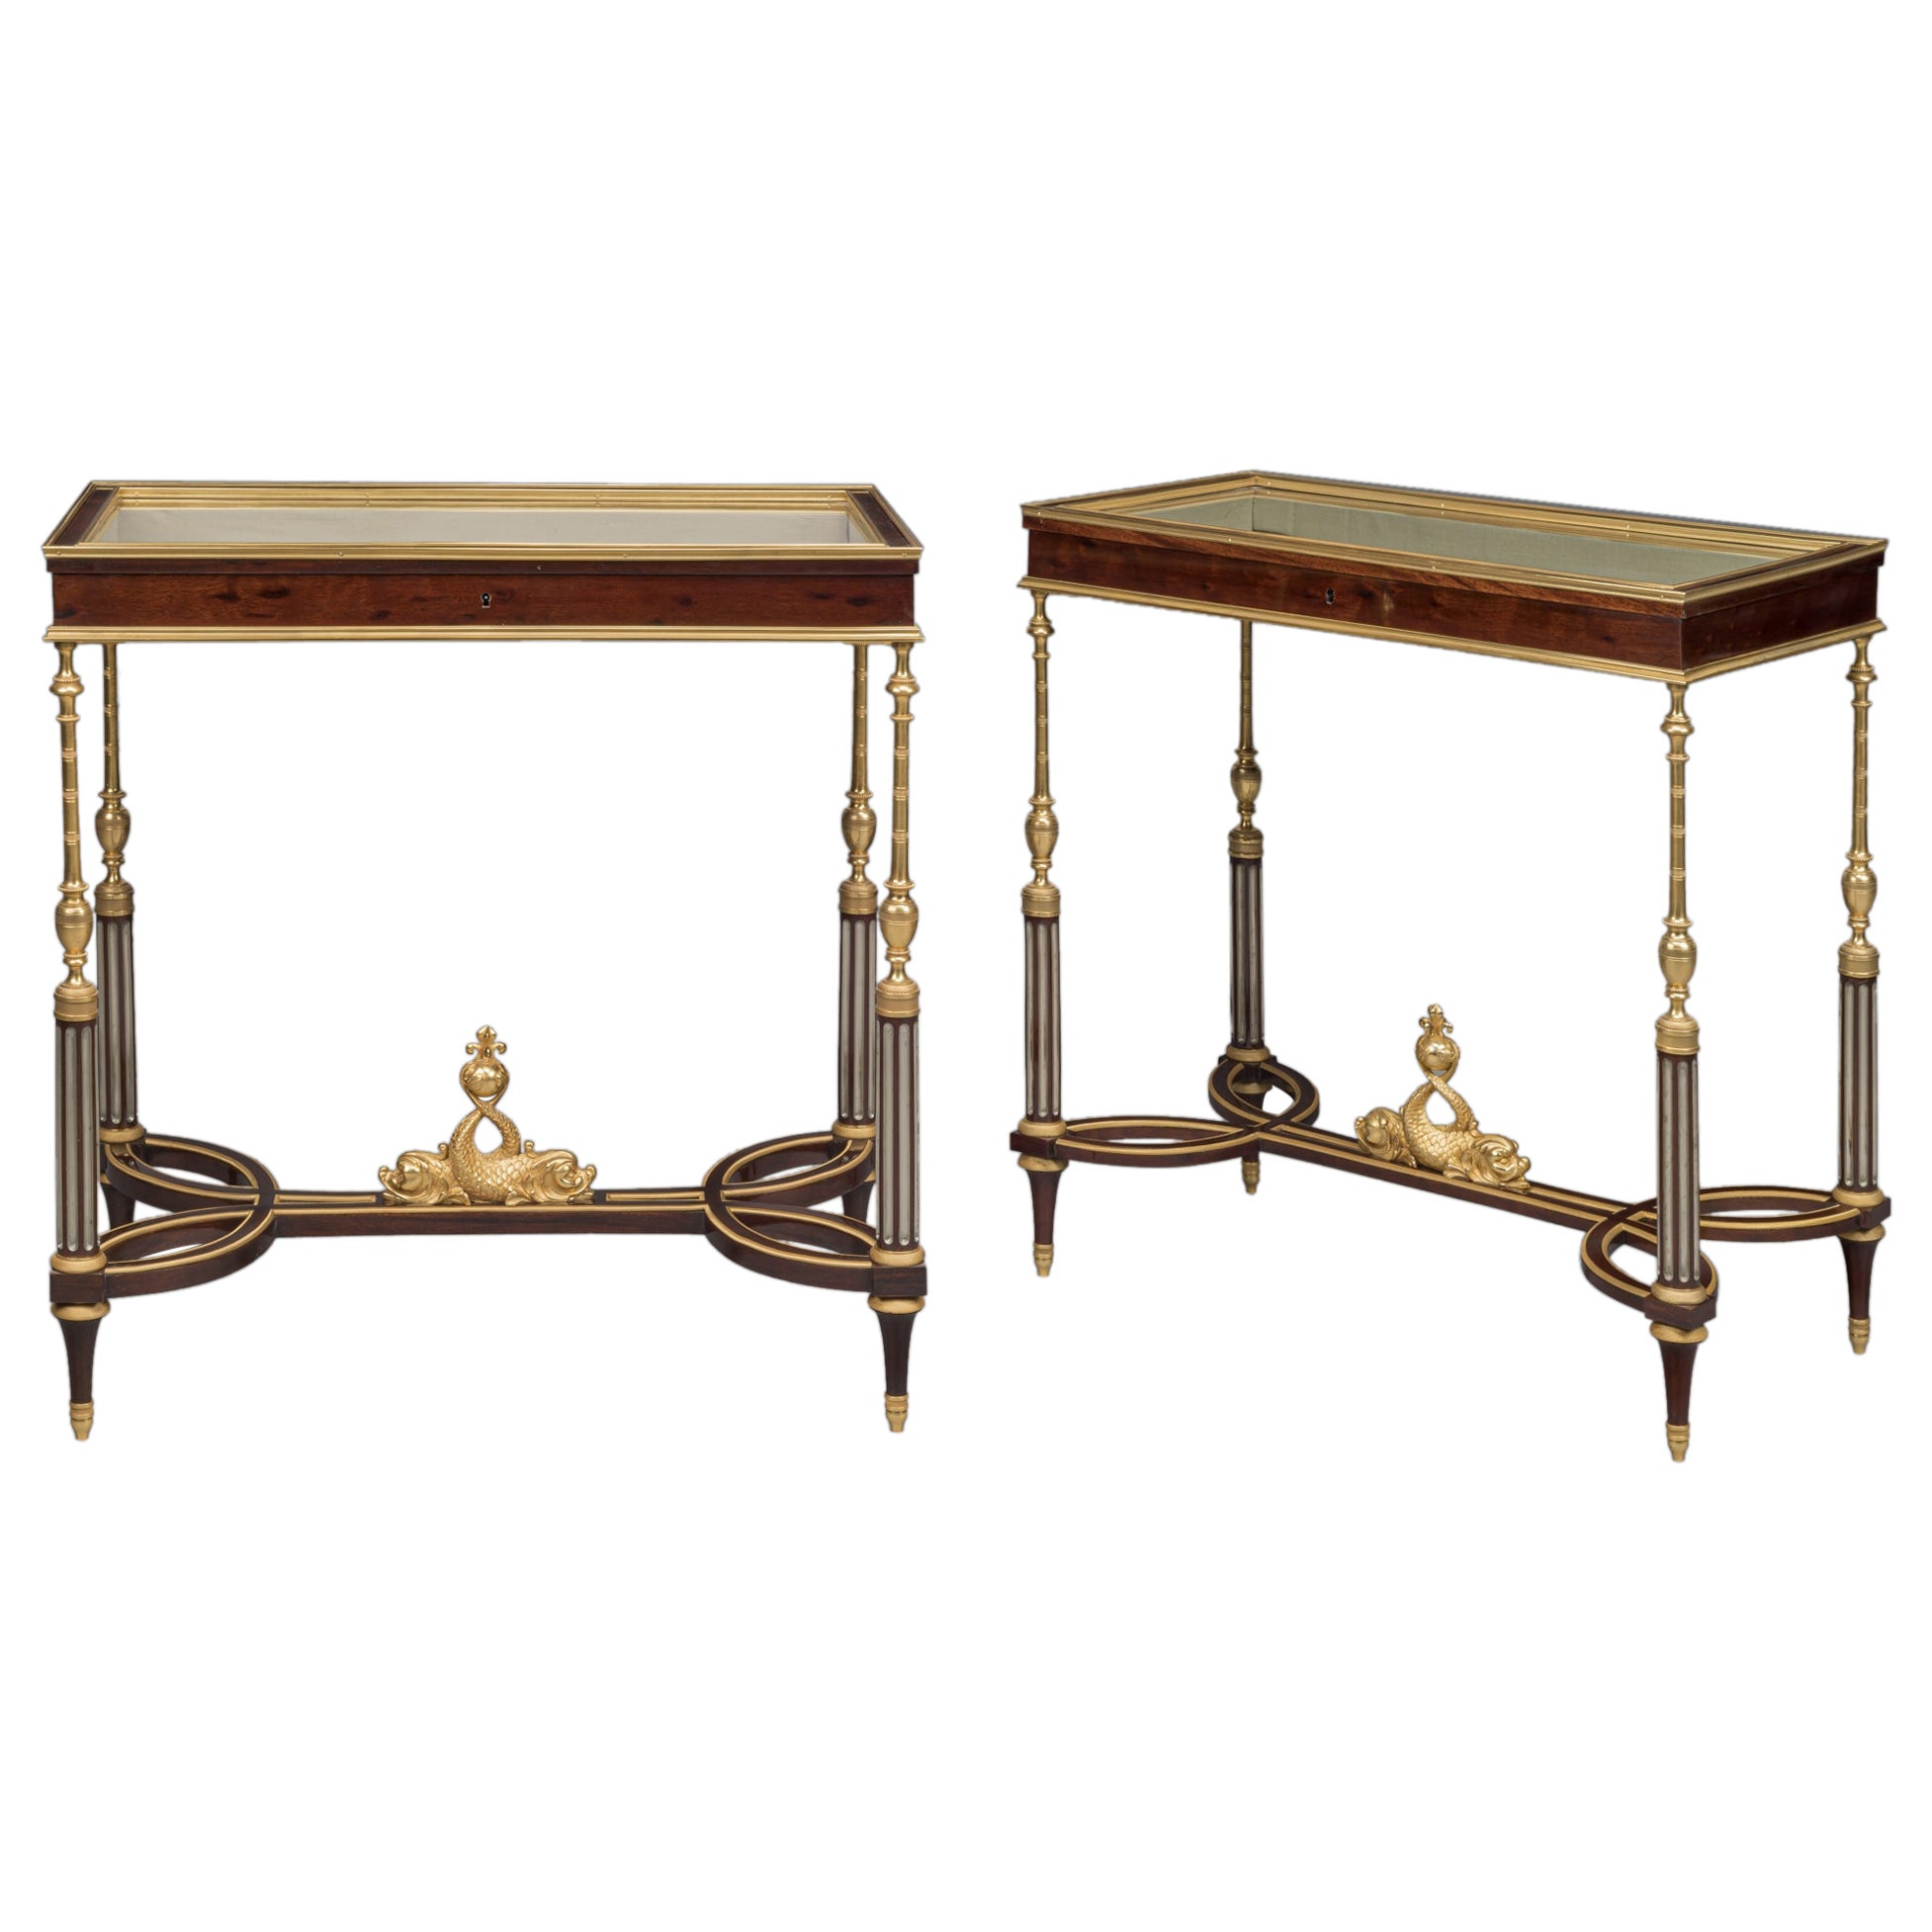 Pair of Louis XVI Style Gilt-Bronze Mounted Vitrine Tables